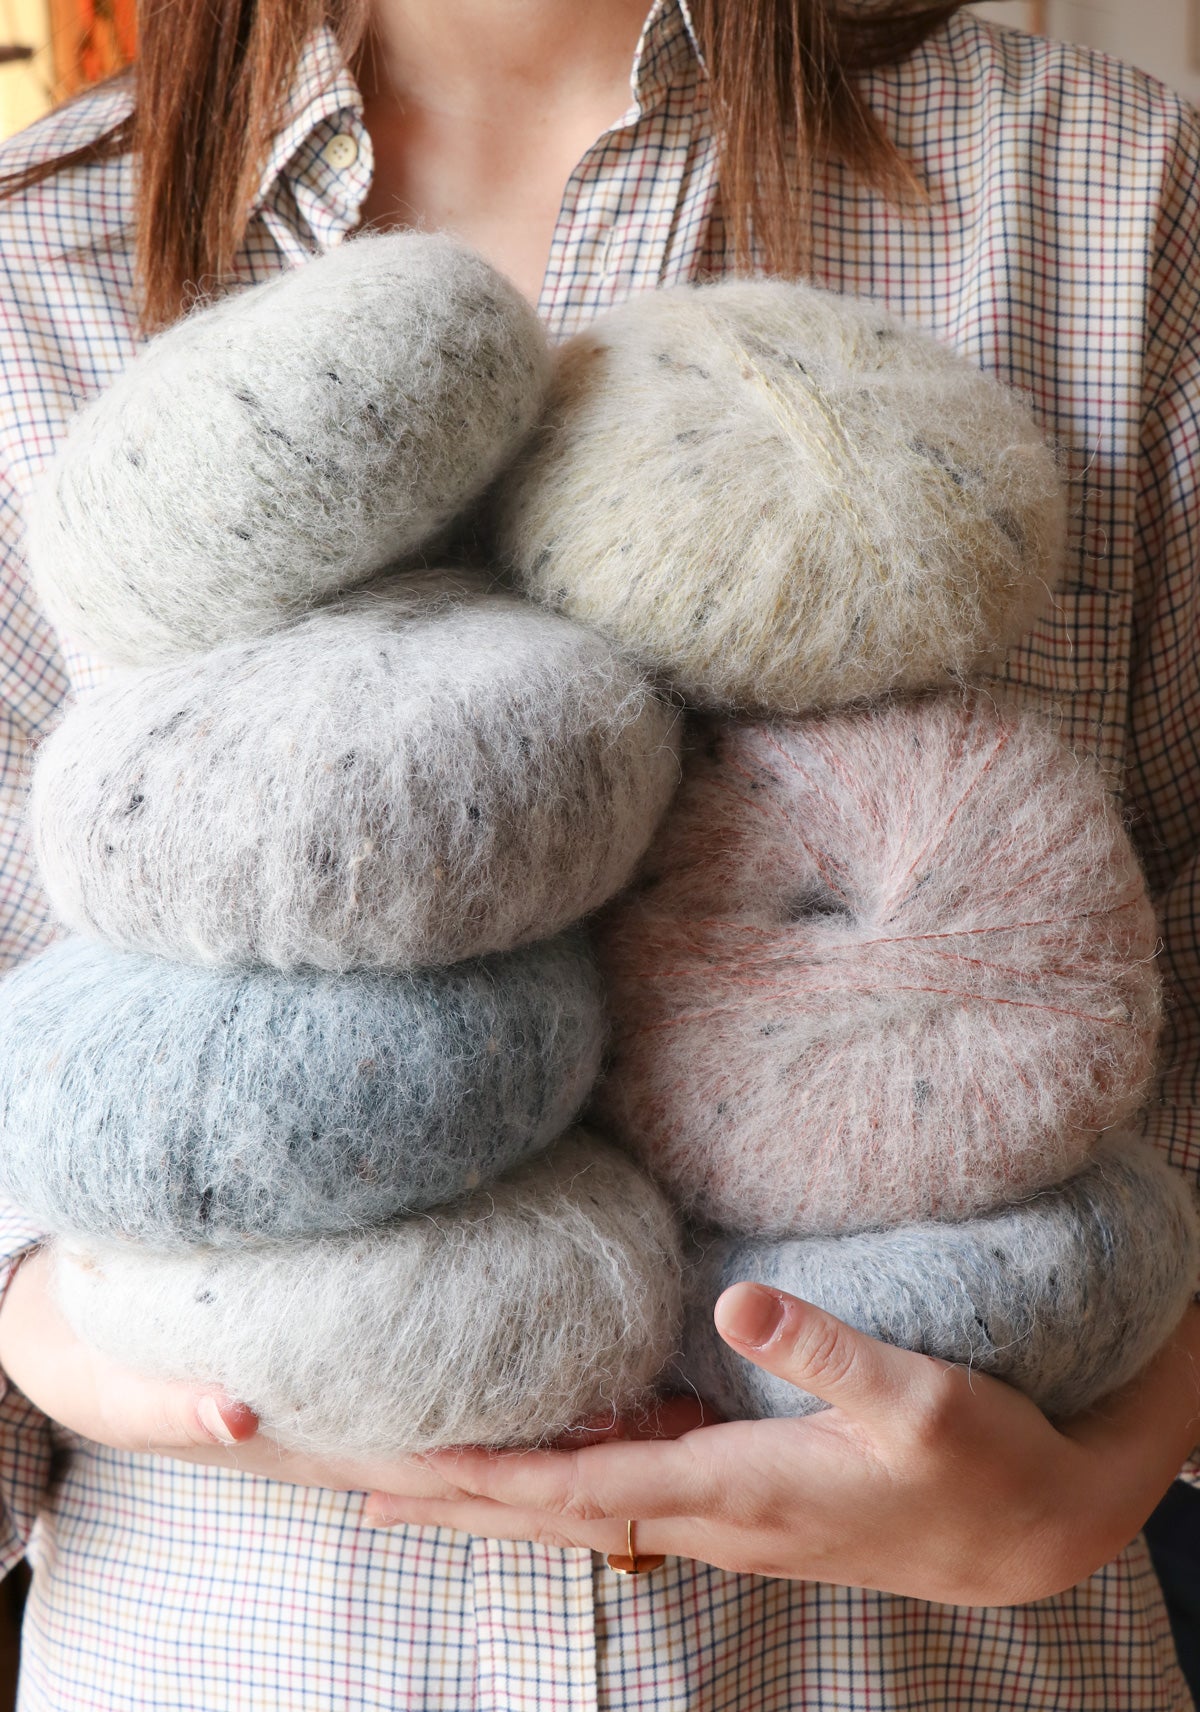 15 Pack of Fuzzy Yarn Balls